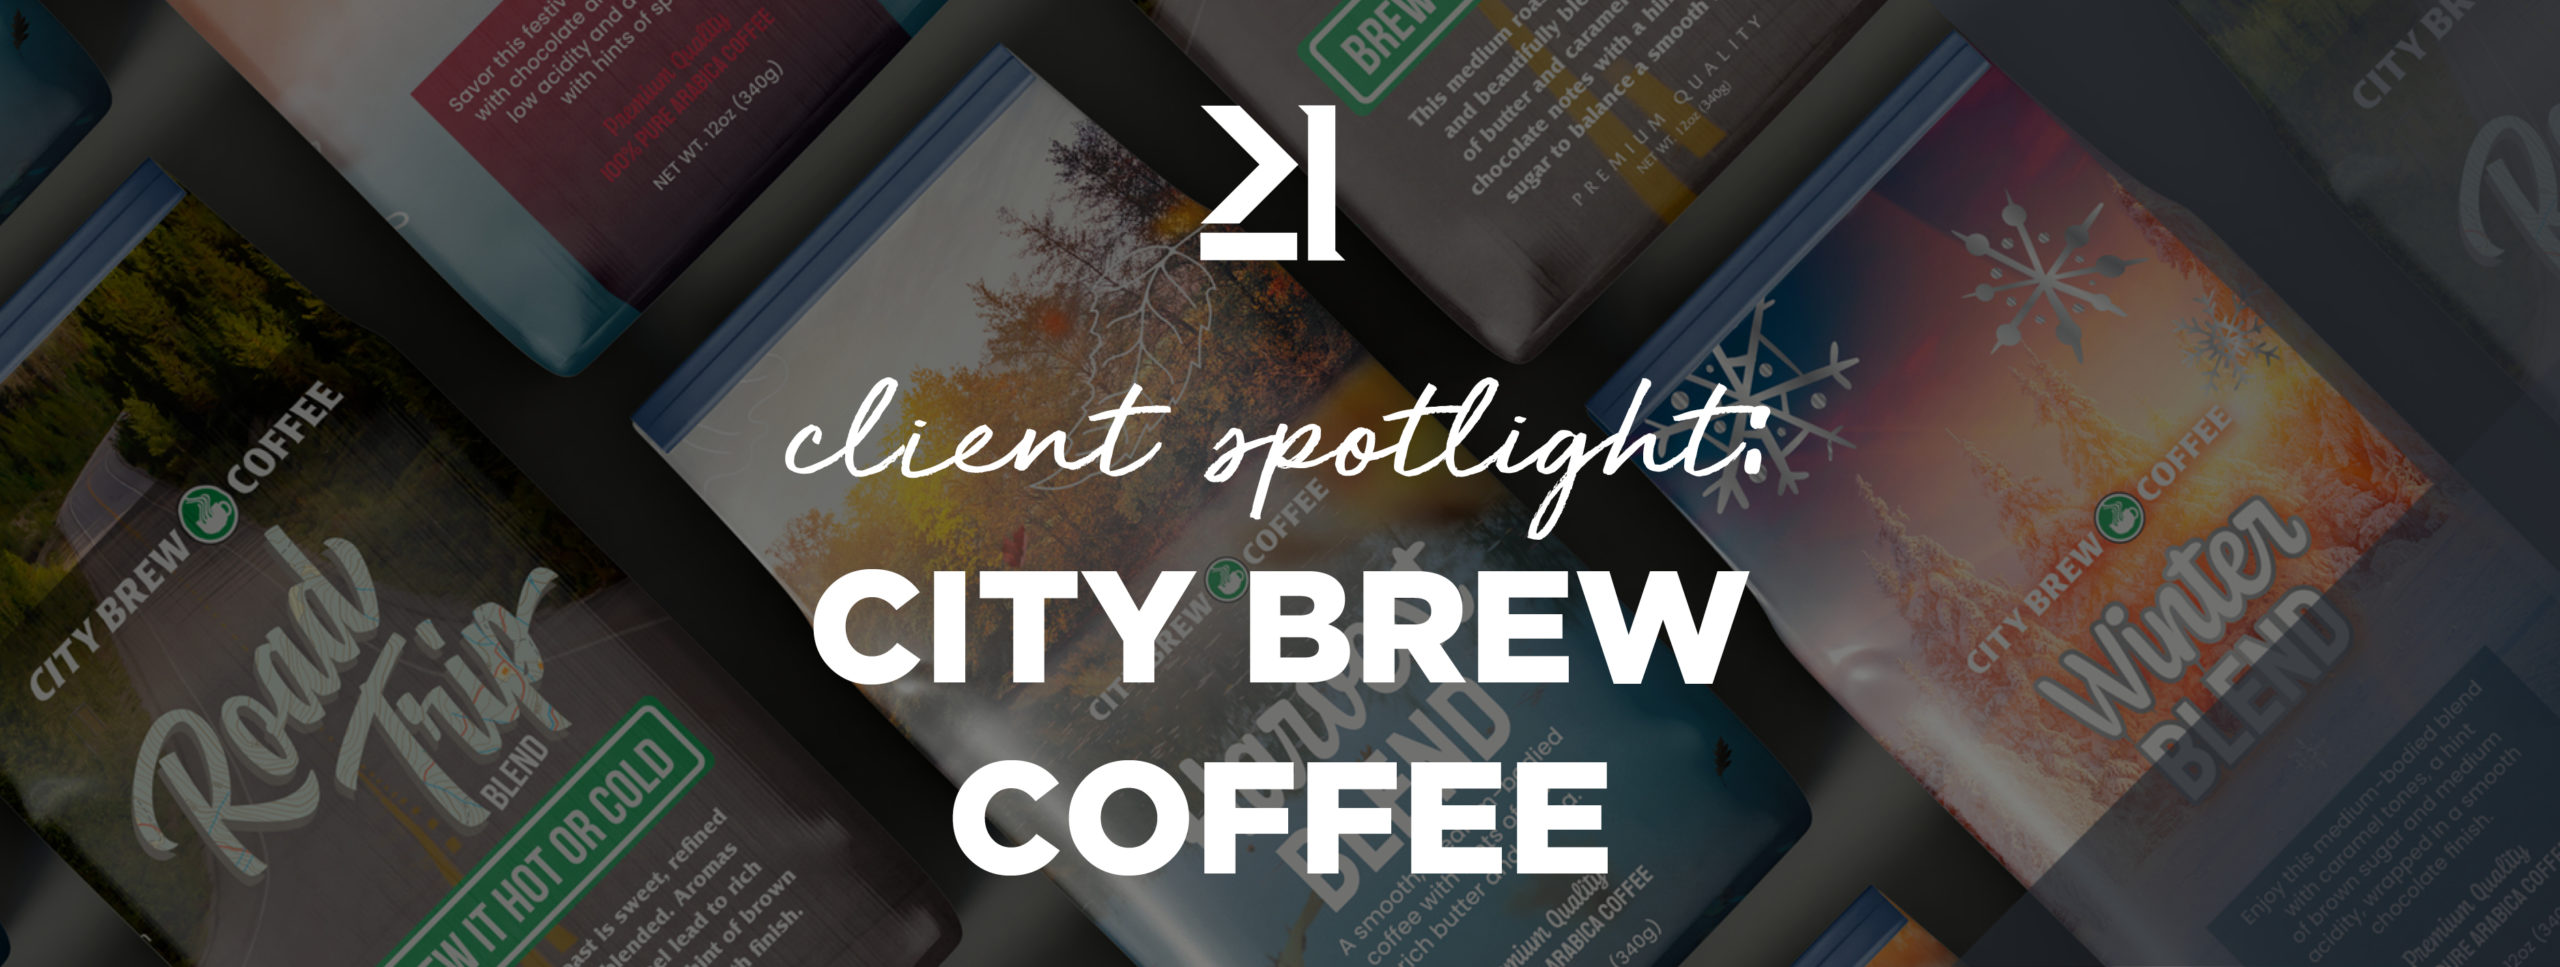 Marketing for City Brew Coffee Billings, Montana